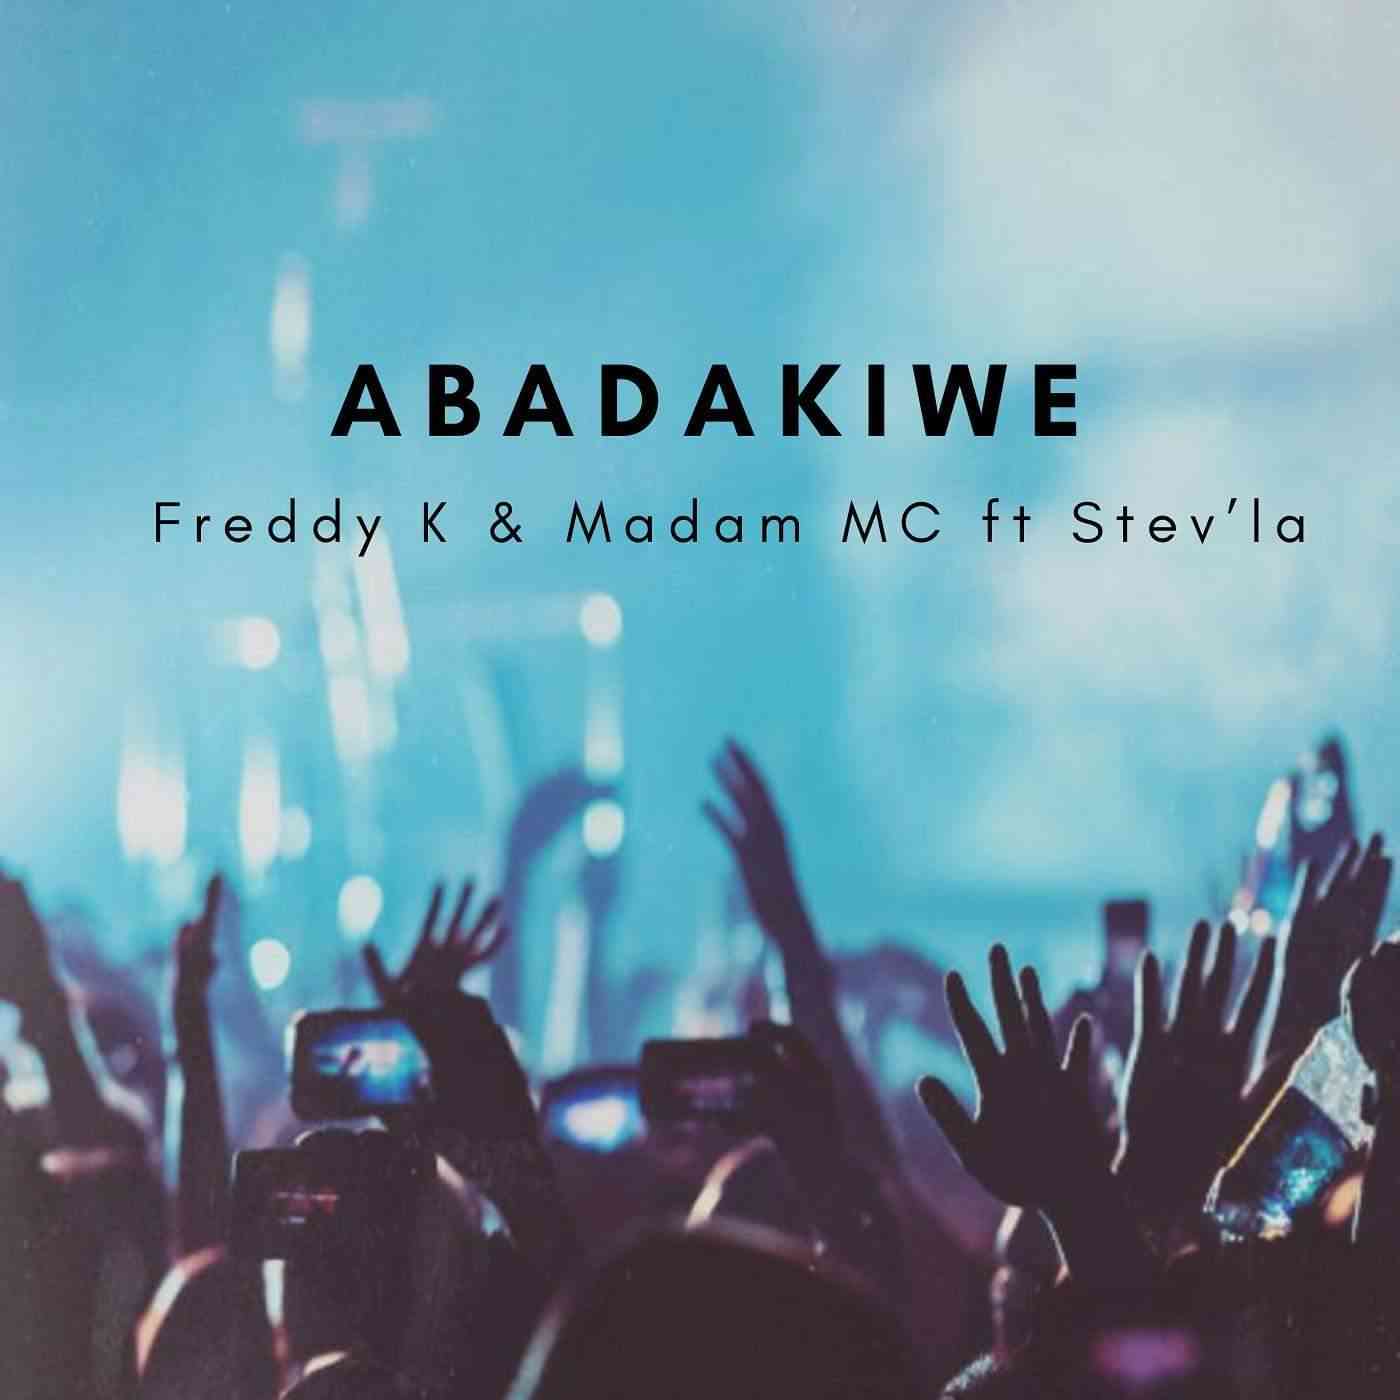 Freddy K & Madam MC Abadakiwe ft Stev